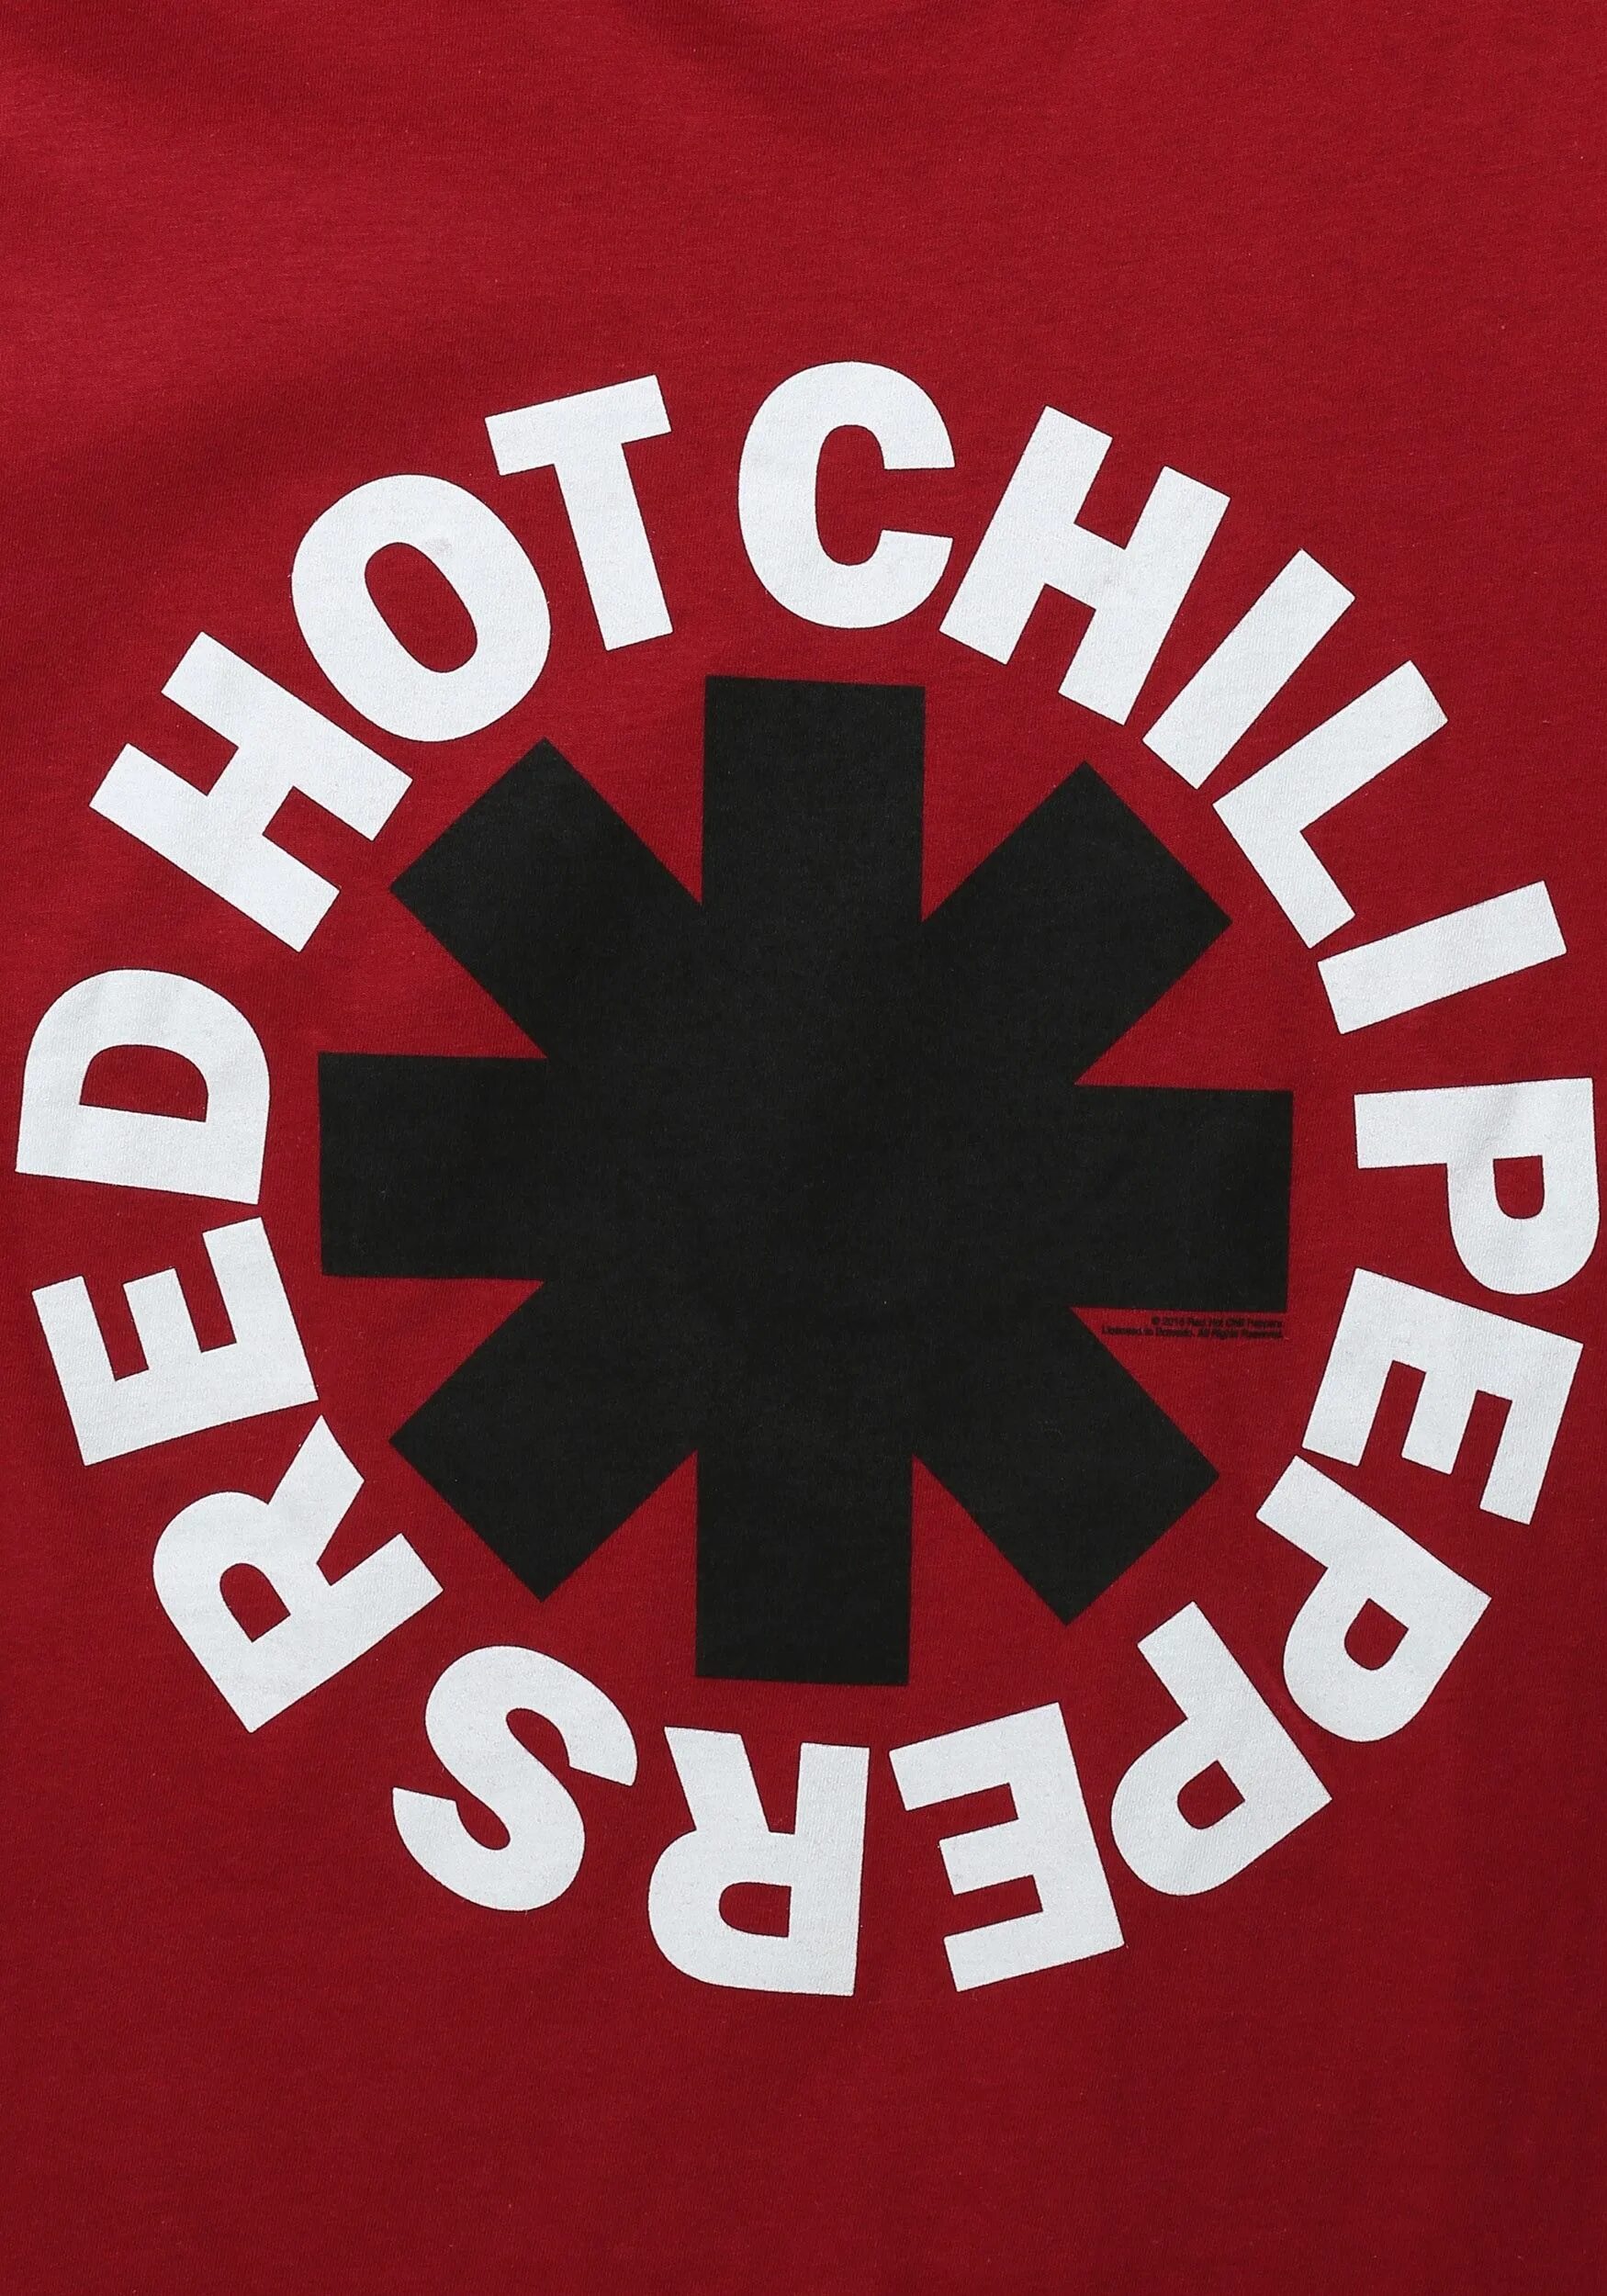 Ред хот Чили пеперс. Red hot Chili Peppers обои. RHCP 1989. Red hot Chili Peppers (RHCP). Ред холи пеперс